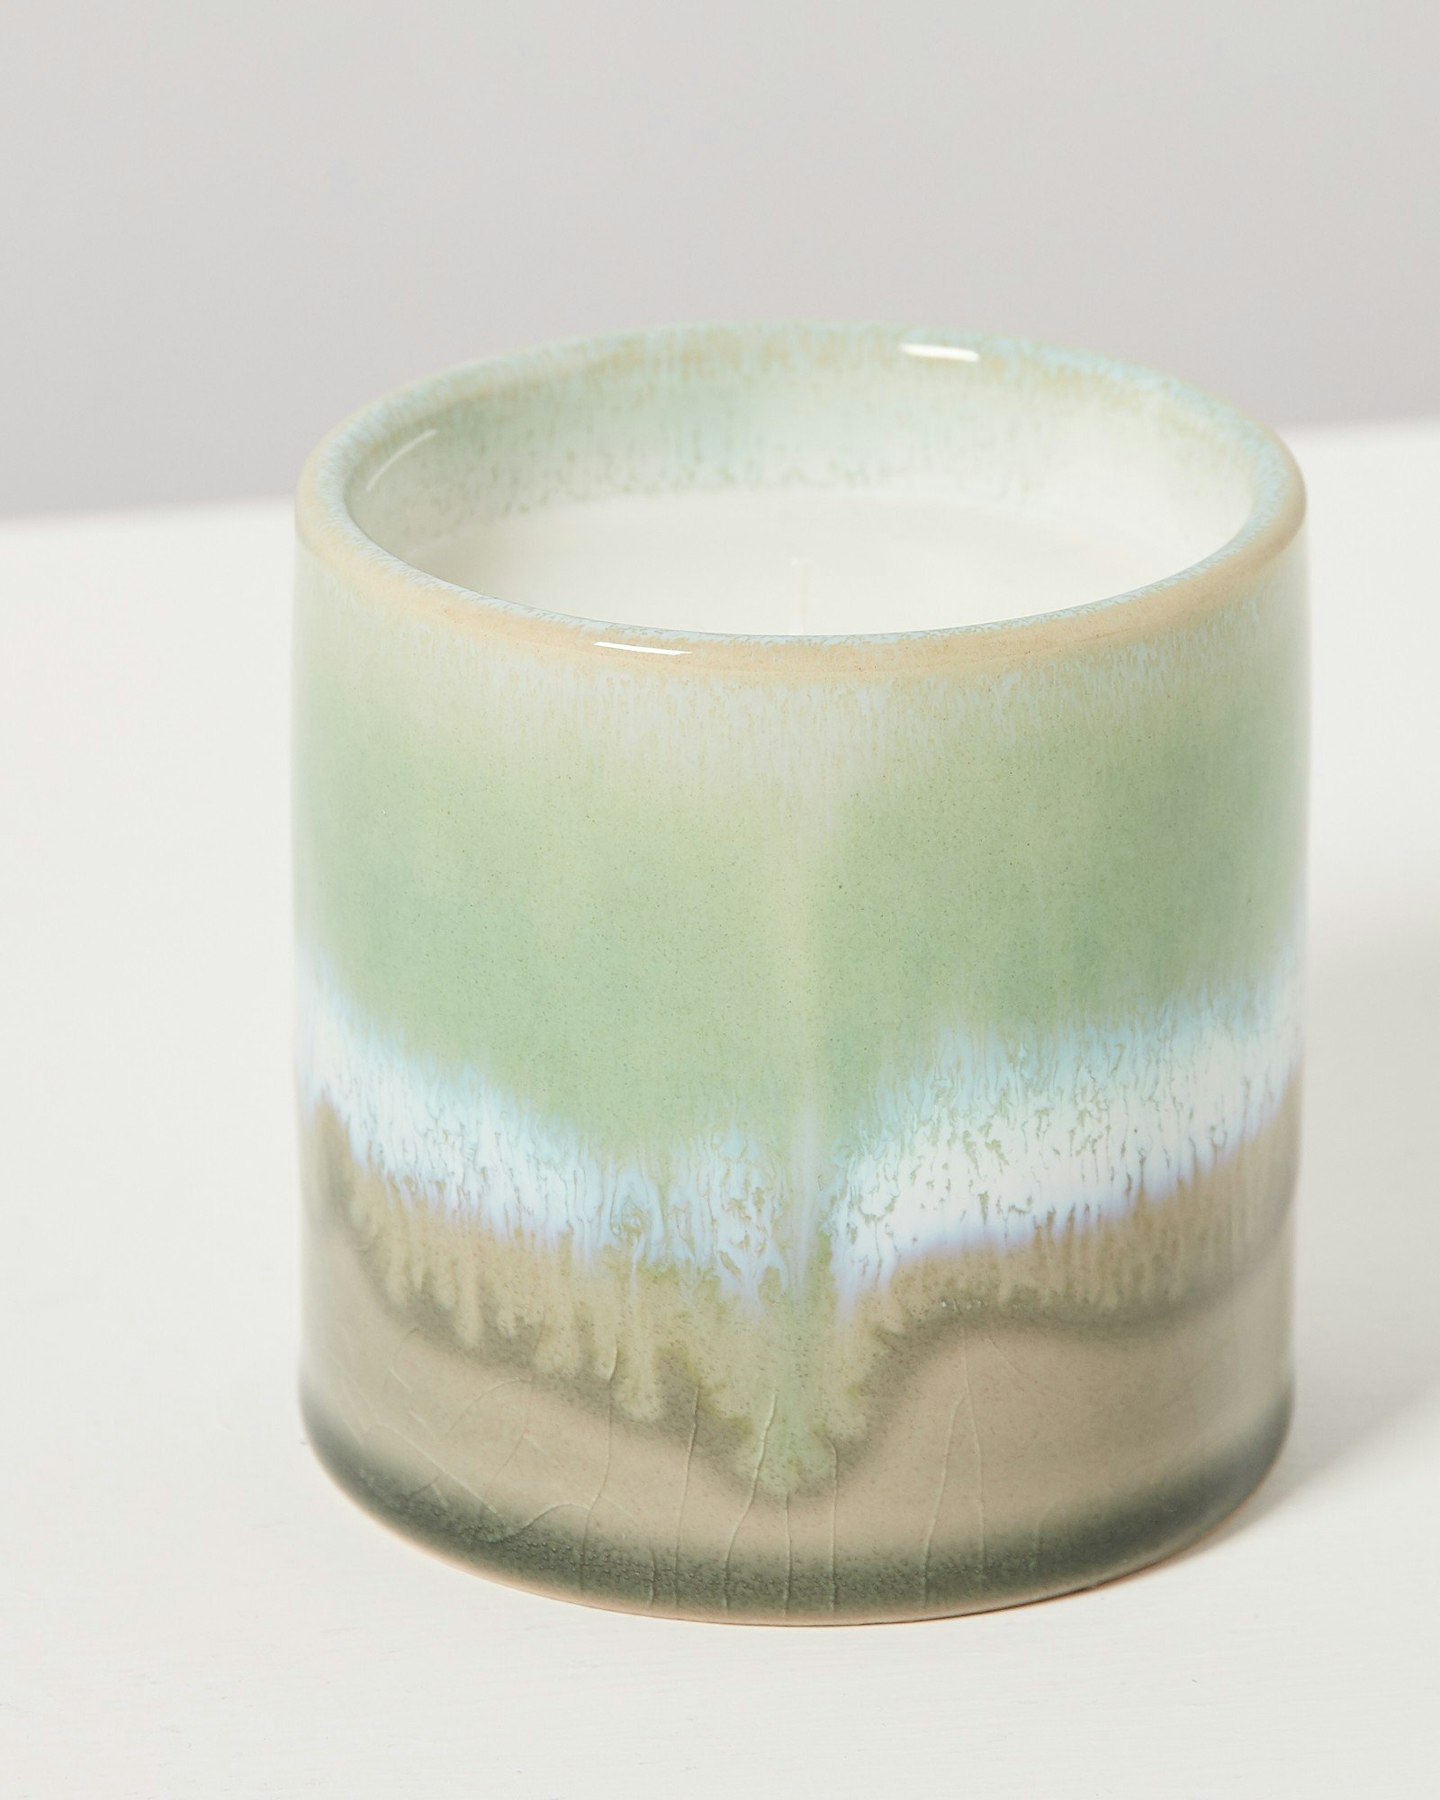 Oliver Bonas, Paradise White Lilac Scented Candle, £14.50